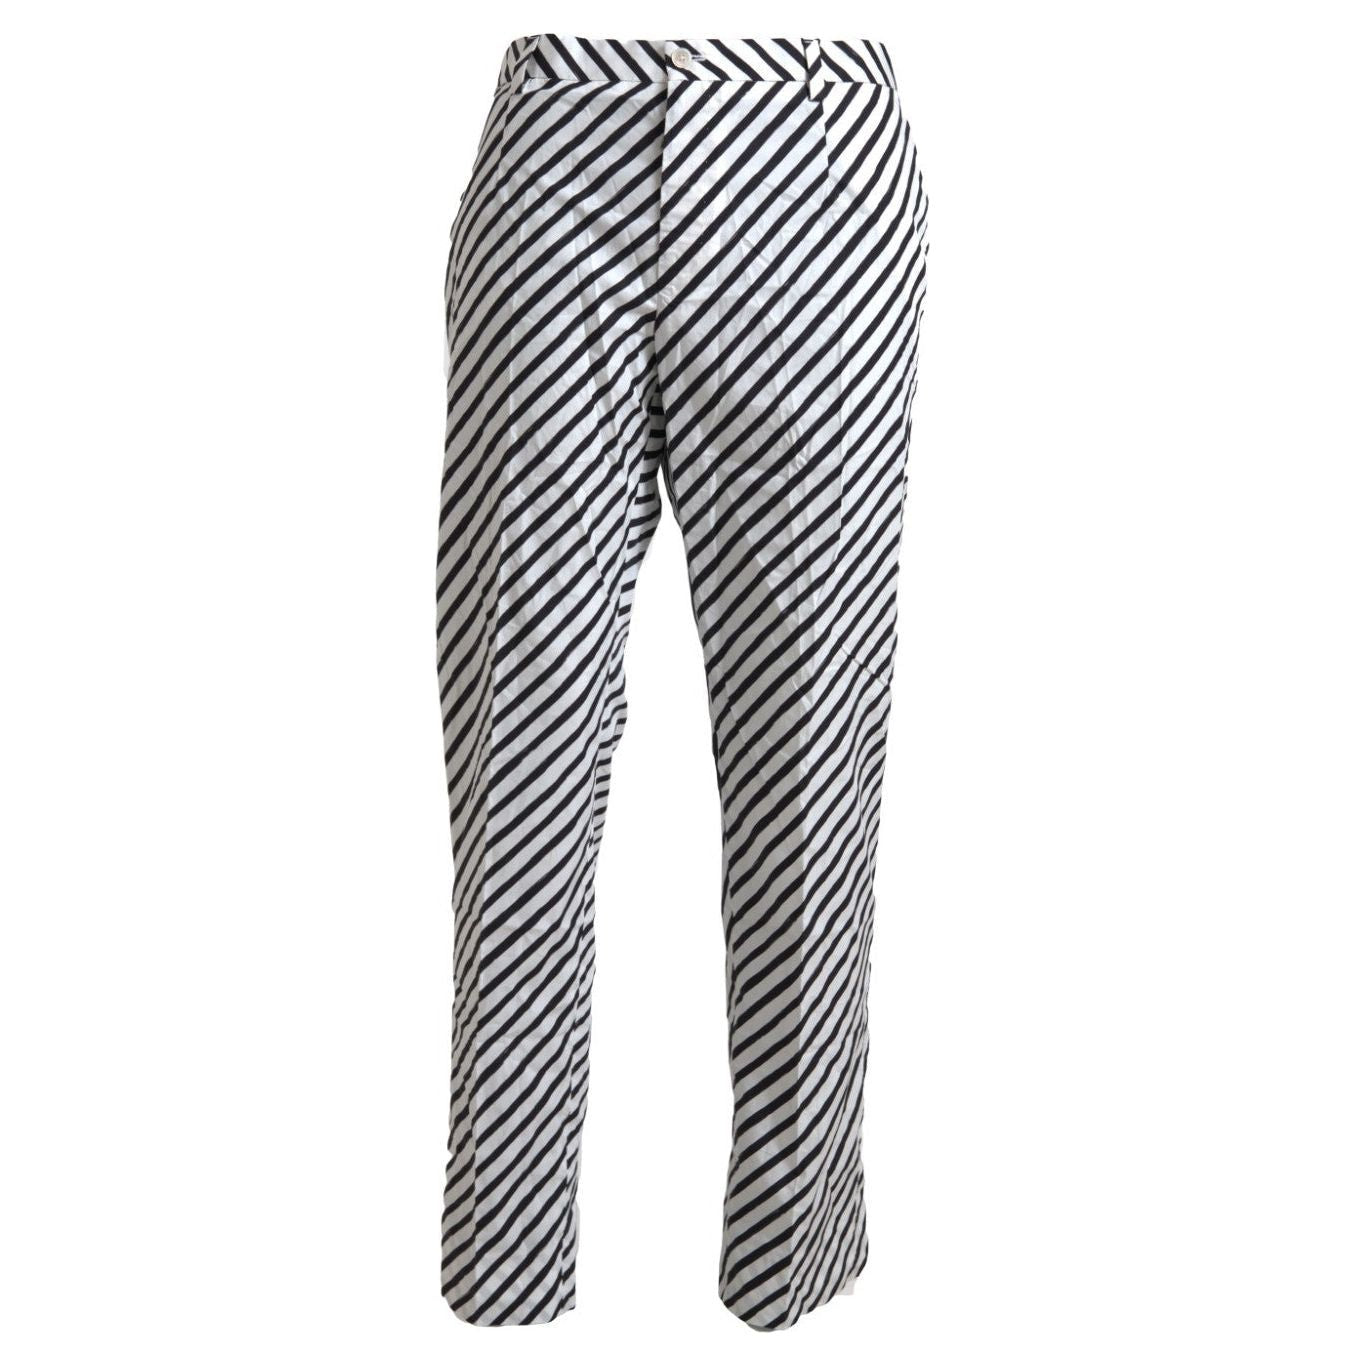 Dolce & Gabbana Elegant Black & White Striped Cotton Pants white-black-cotton-striped-trousers-pants